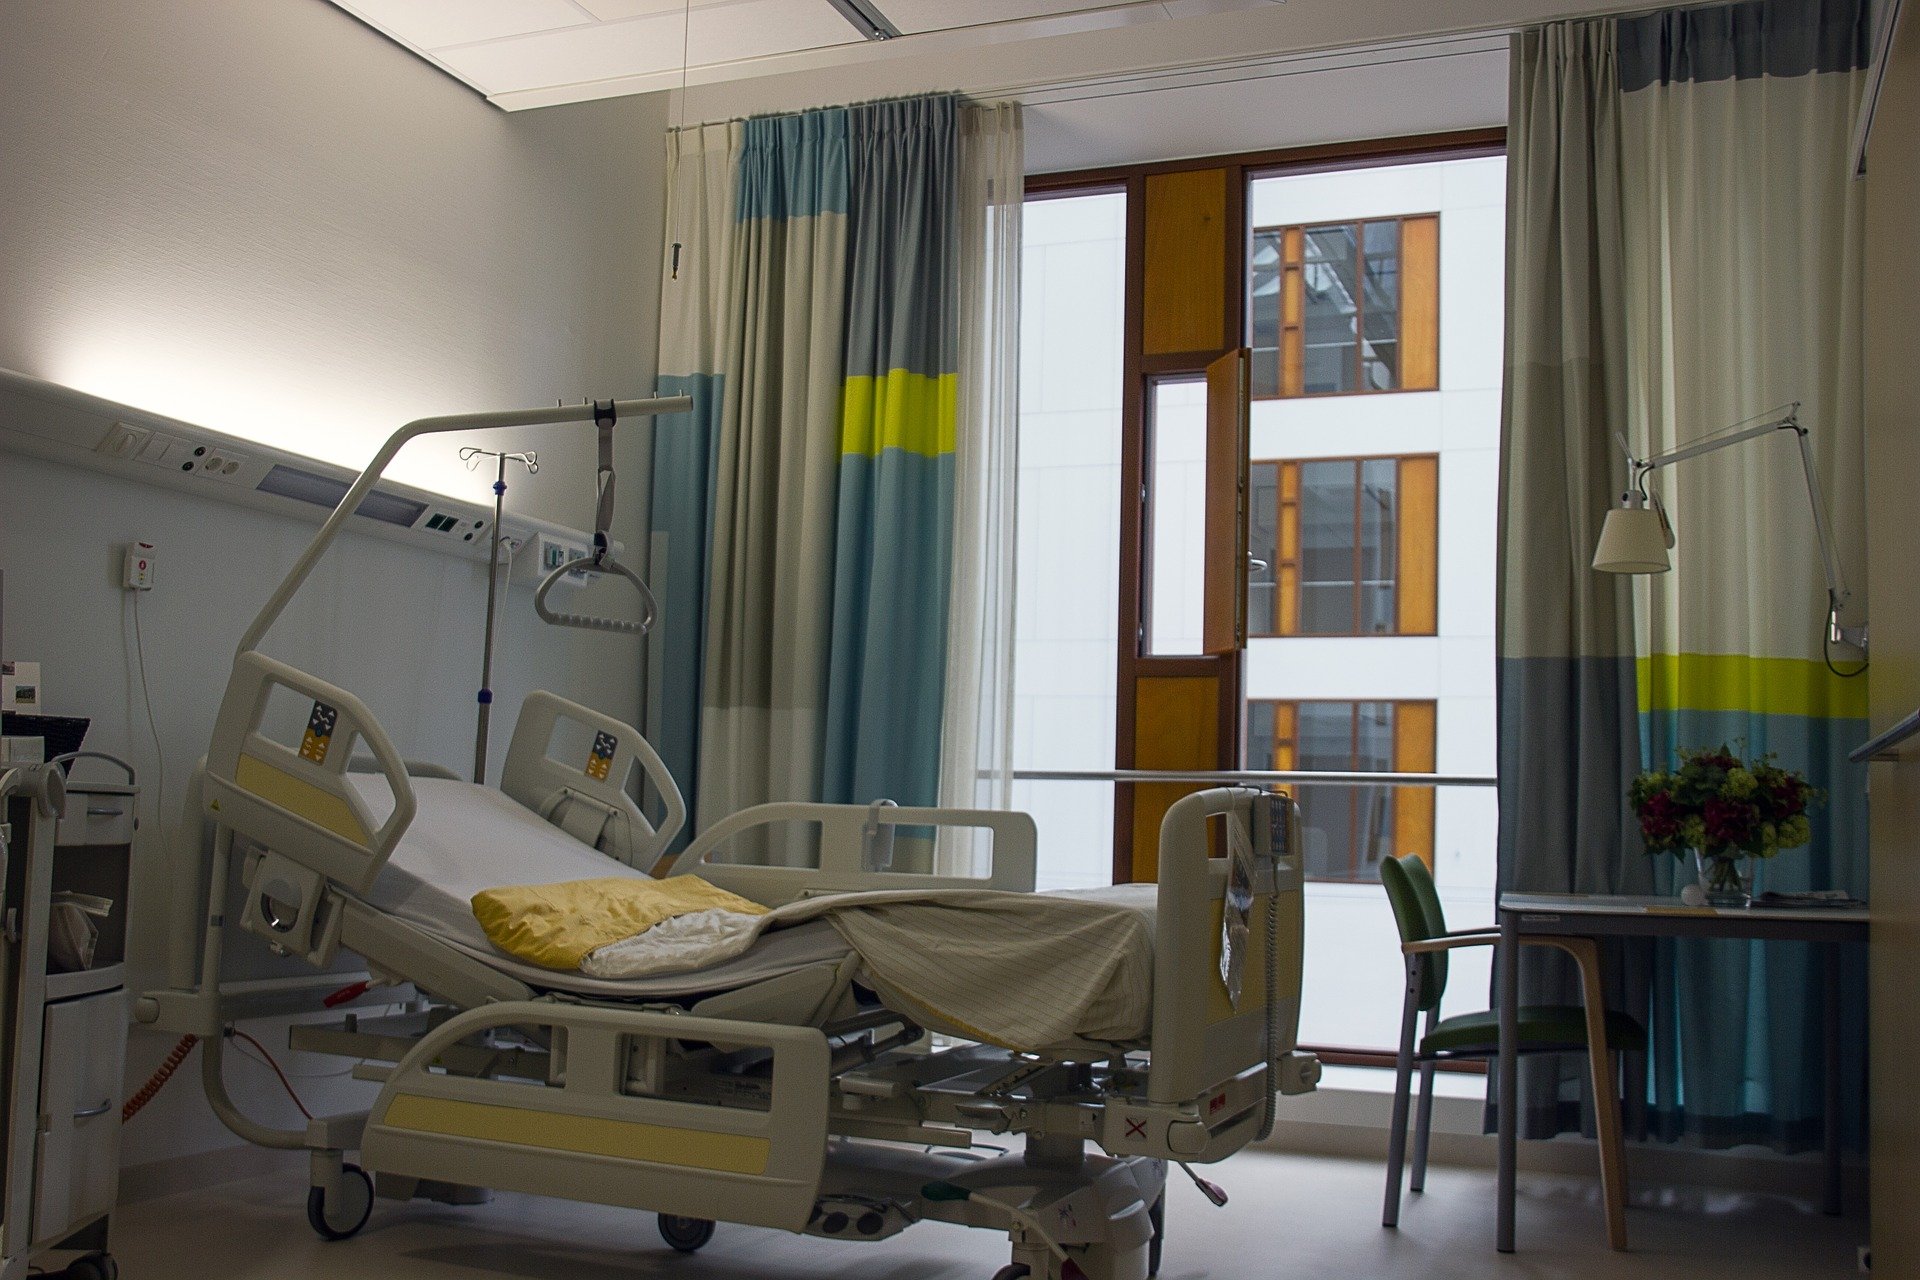 Chambre d' un hôpital. | Photo : Pixabay